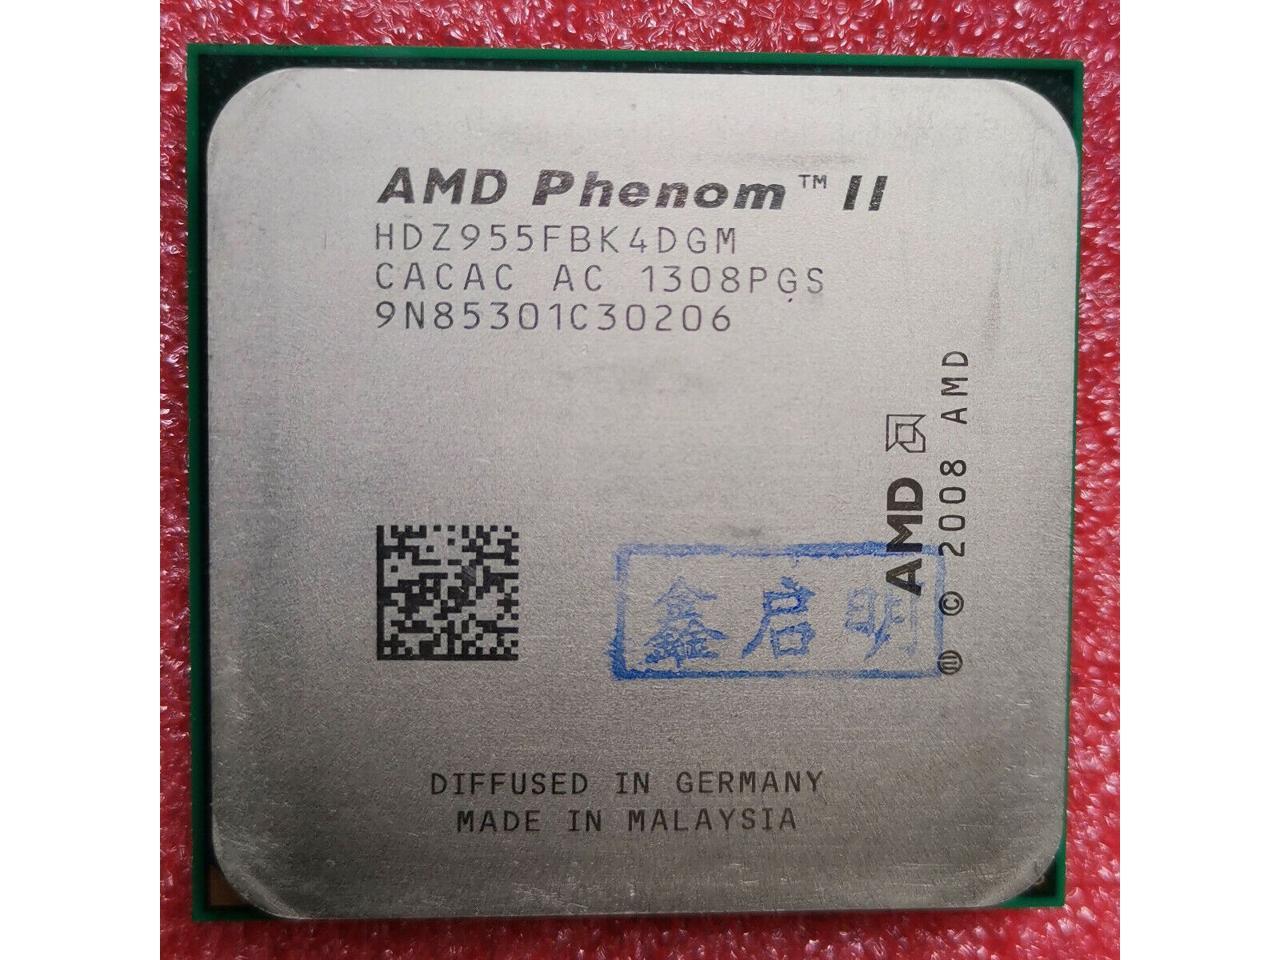 AMD Phenom II X4 955 Black Edition Deneb Quad-Core 3.2 GHz Socket AM3 125W HDZ955FBGIBOX Processor